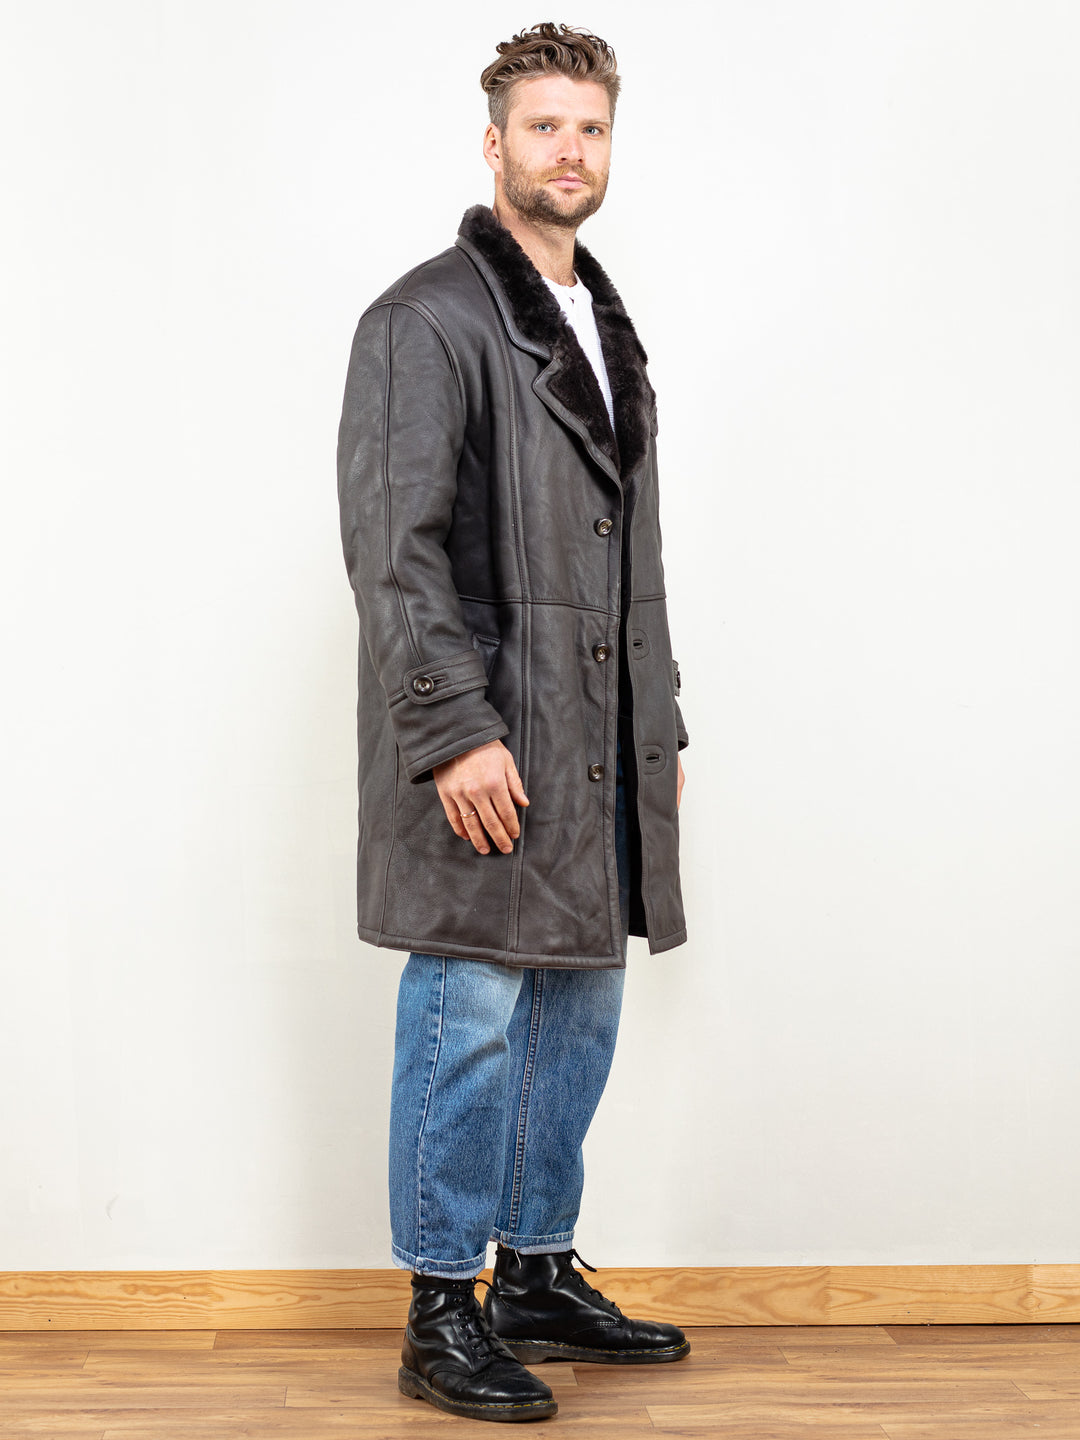 Sheepskin Shearling Coat vintage 70’s grey leather coat men winter overcoat vintage sheepskin leather boho clothing outwear size large L